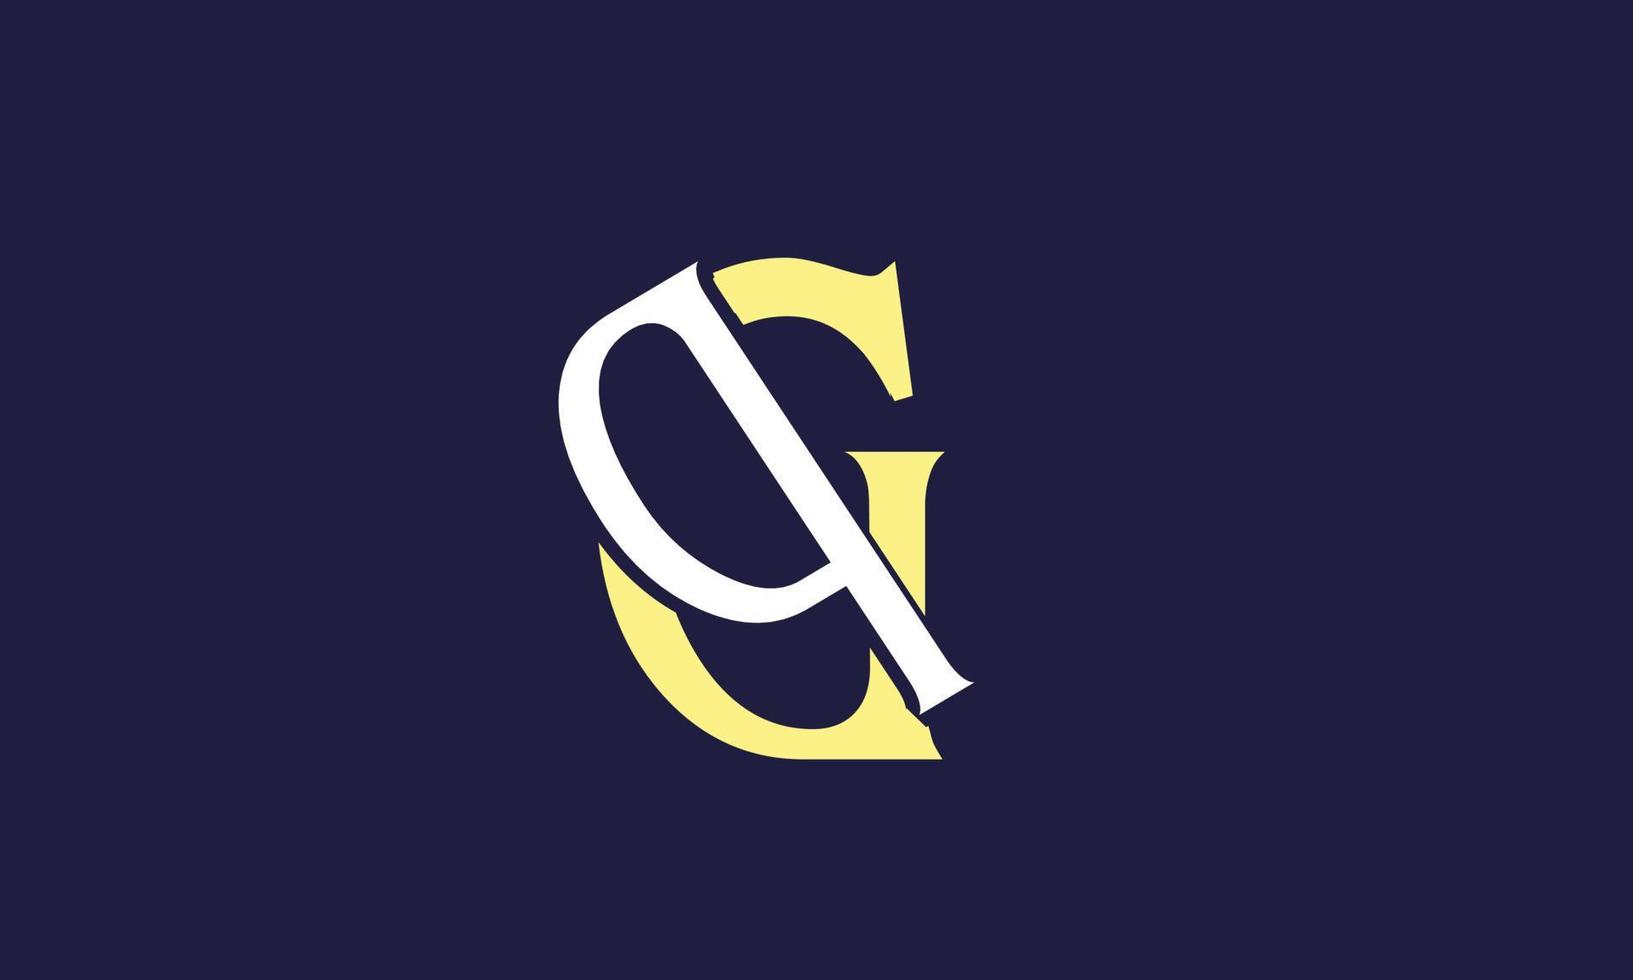 Alphabet letters Initials Monogram logo QG, GQ, Q and G vector